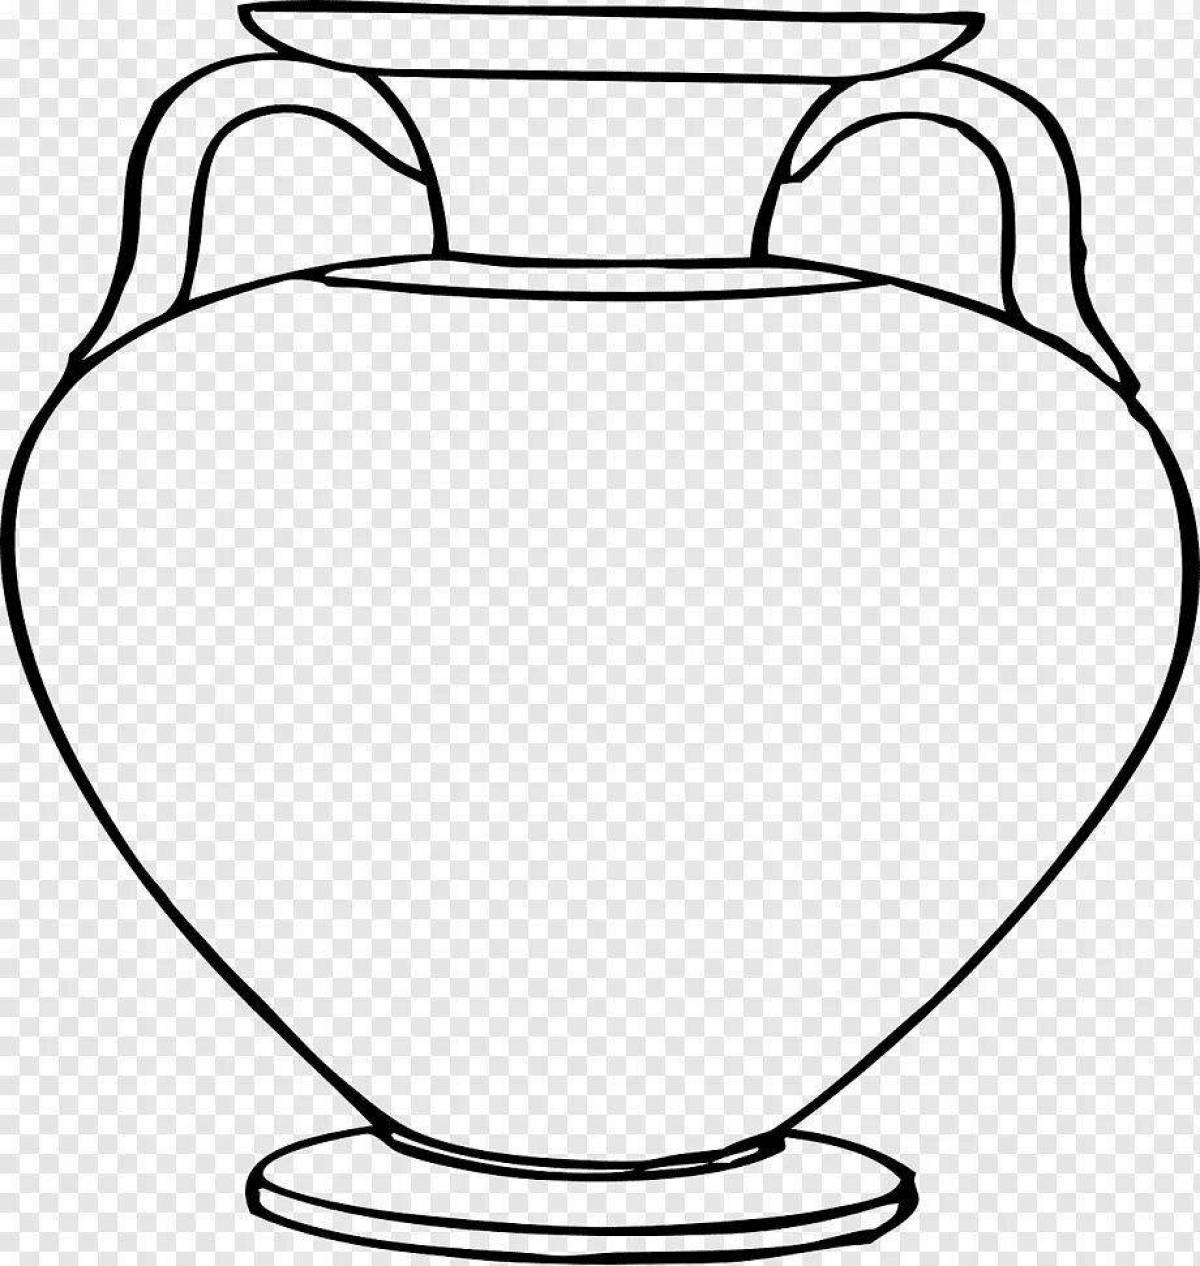 Раскраска элегантная греческая ваза